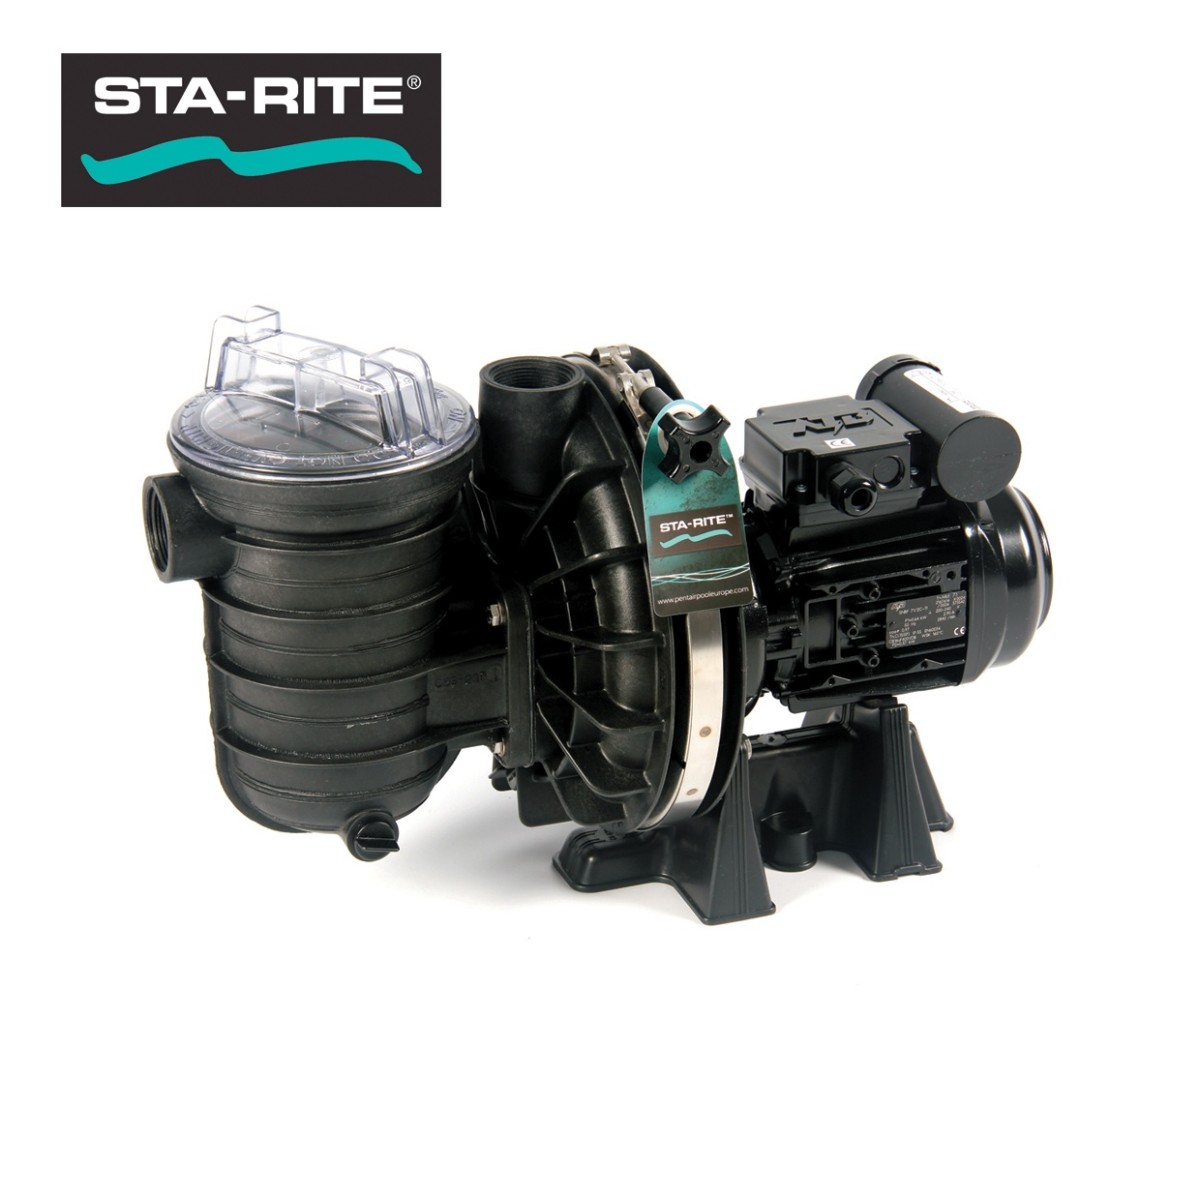 Sta-Rite 5P2R pump - kw 1.1 - load 19 m3/h at 8 mwc single speed